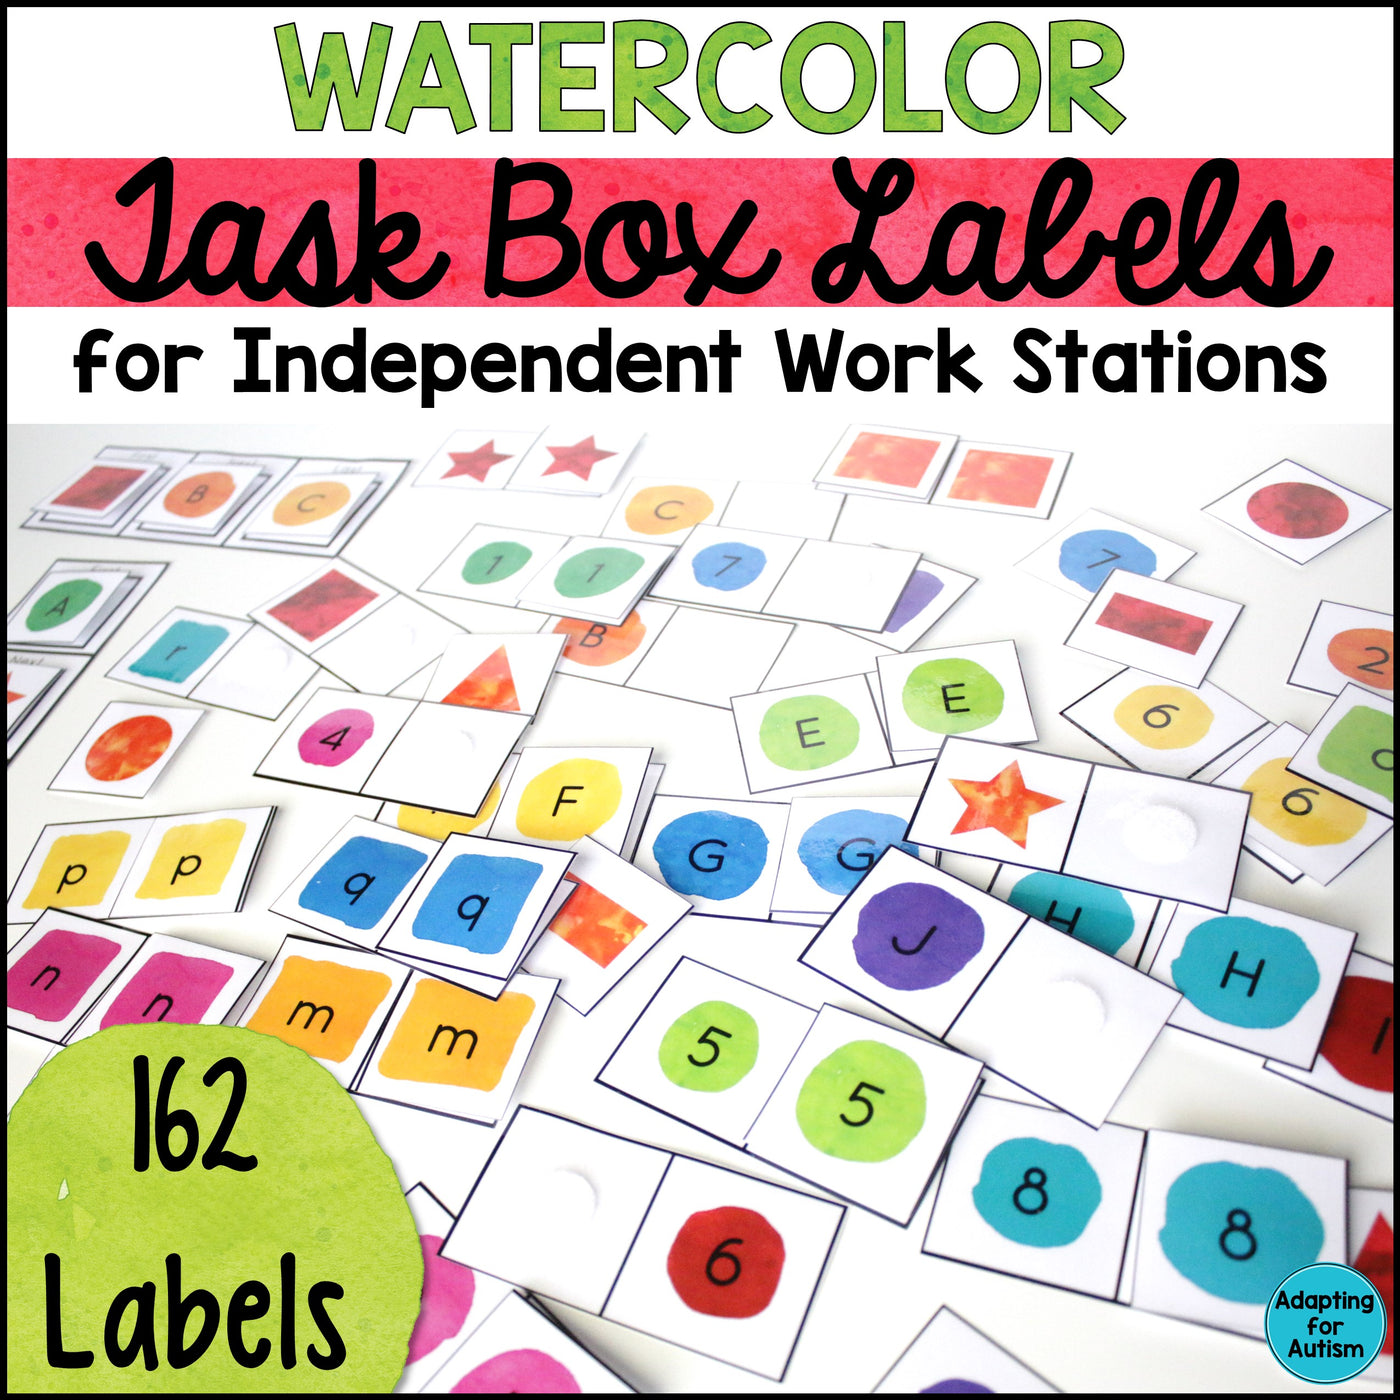 task-box-labels-for-independent-work-stations-autism-work-tasks